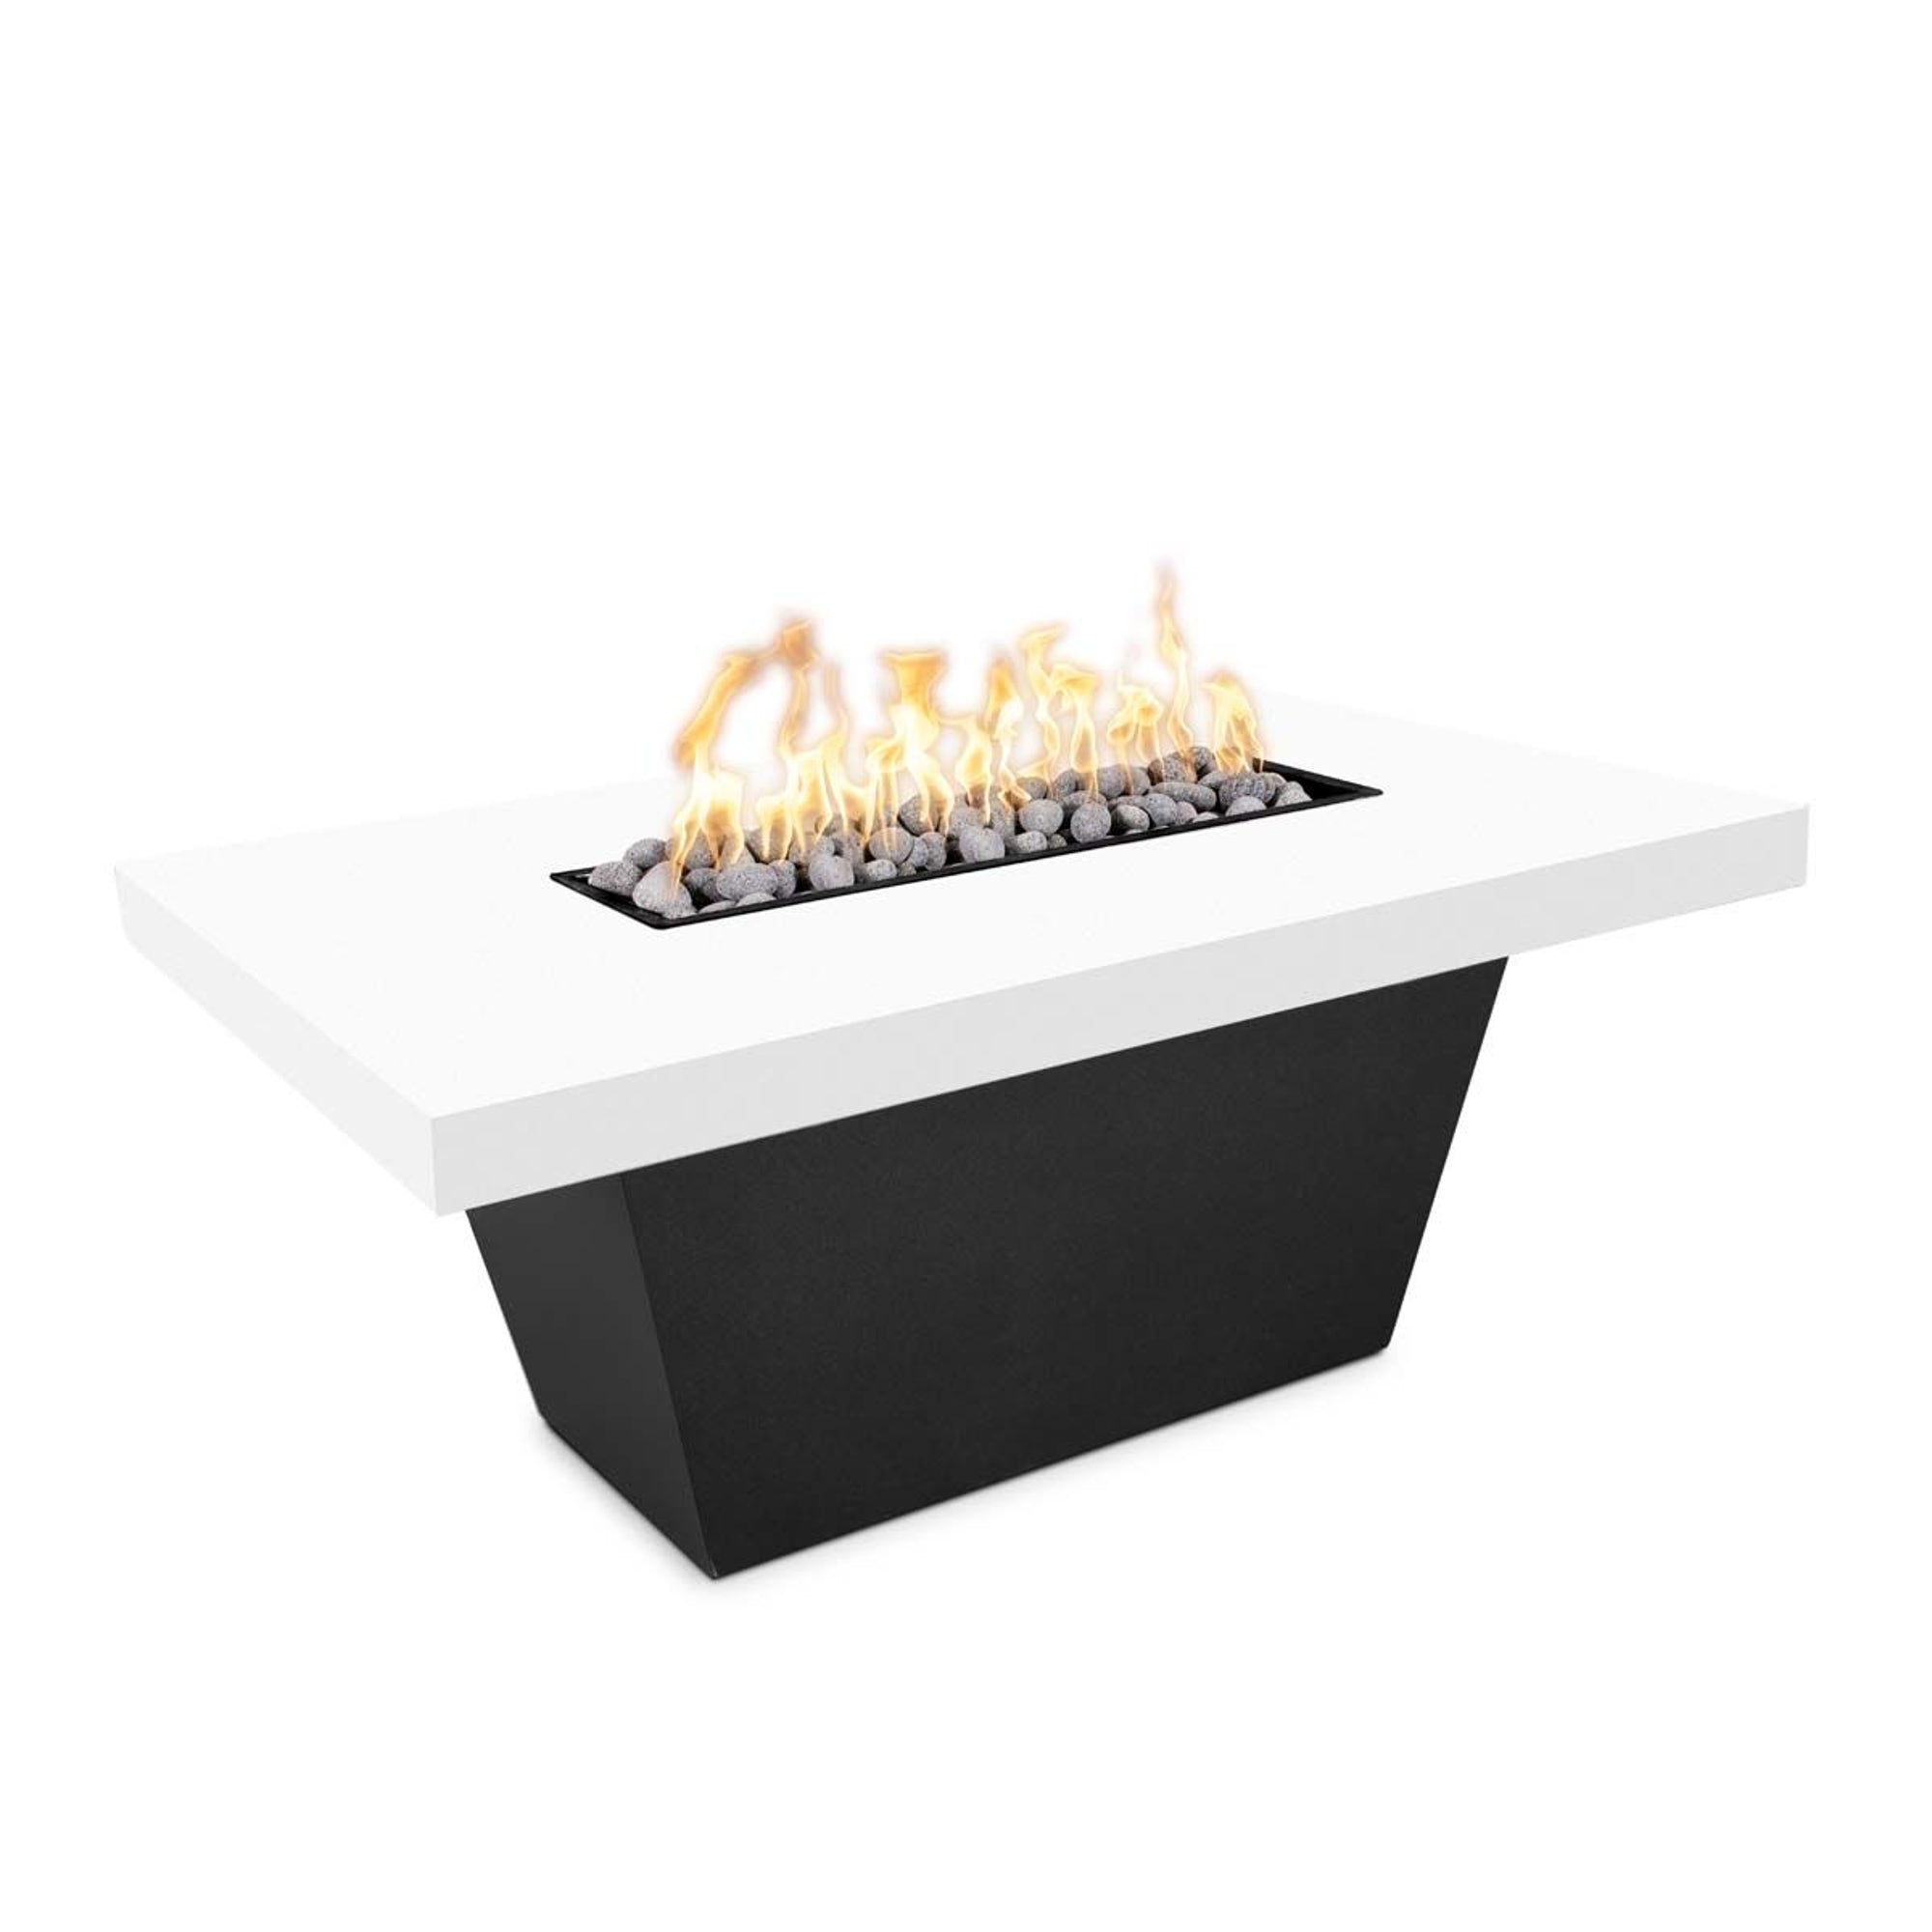 The Outdoor Plus Tacoma Slate Fire Table - GFRC Top & Metal Powder Coat Base